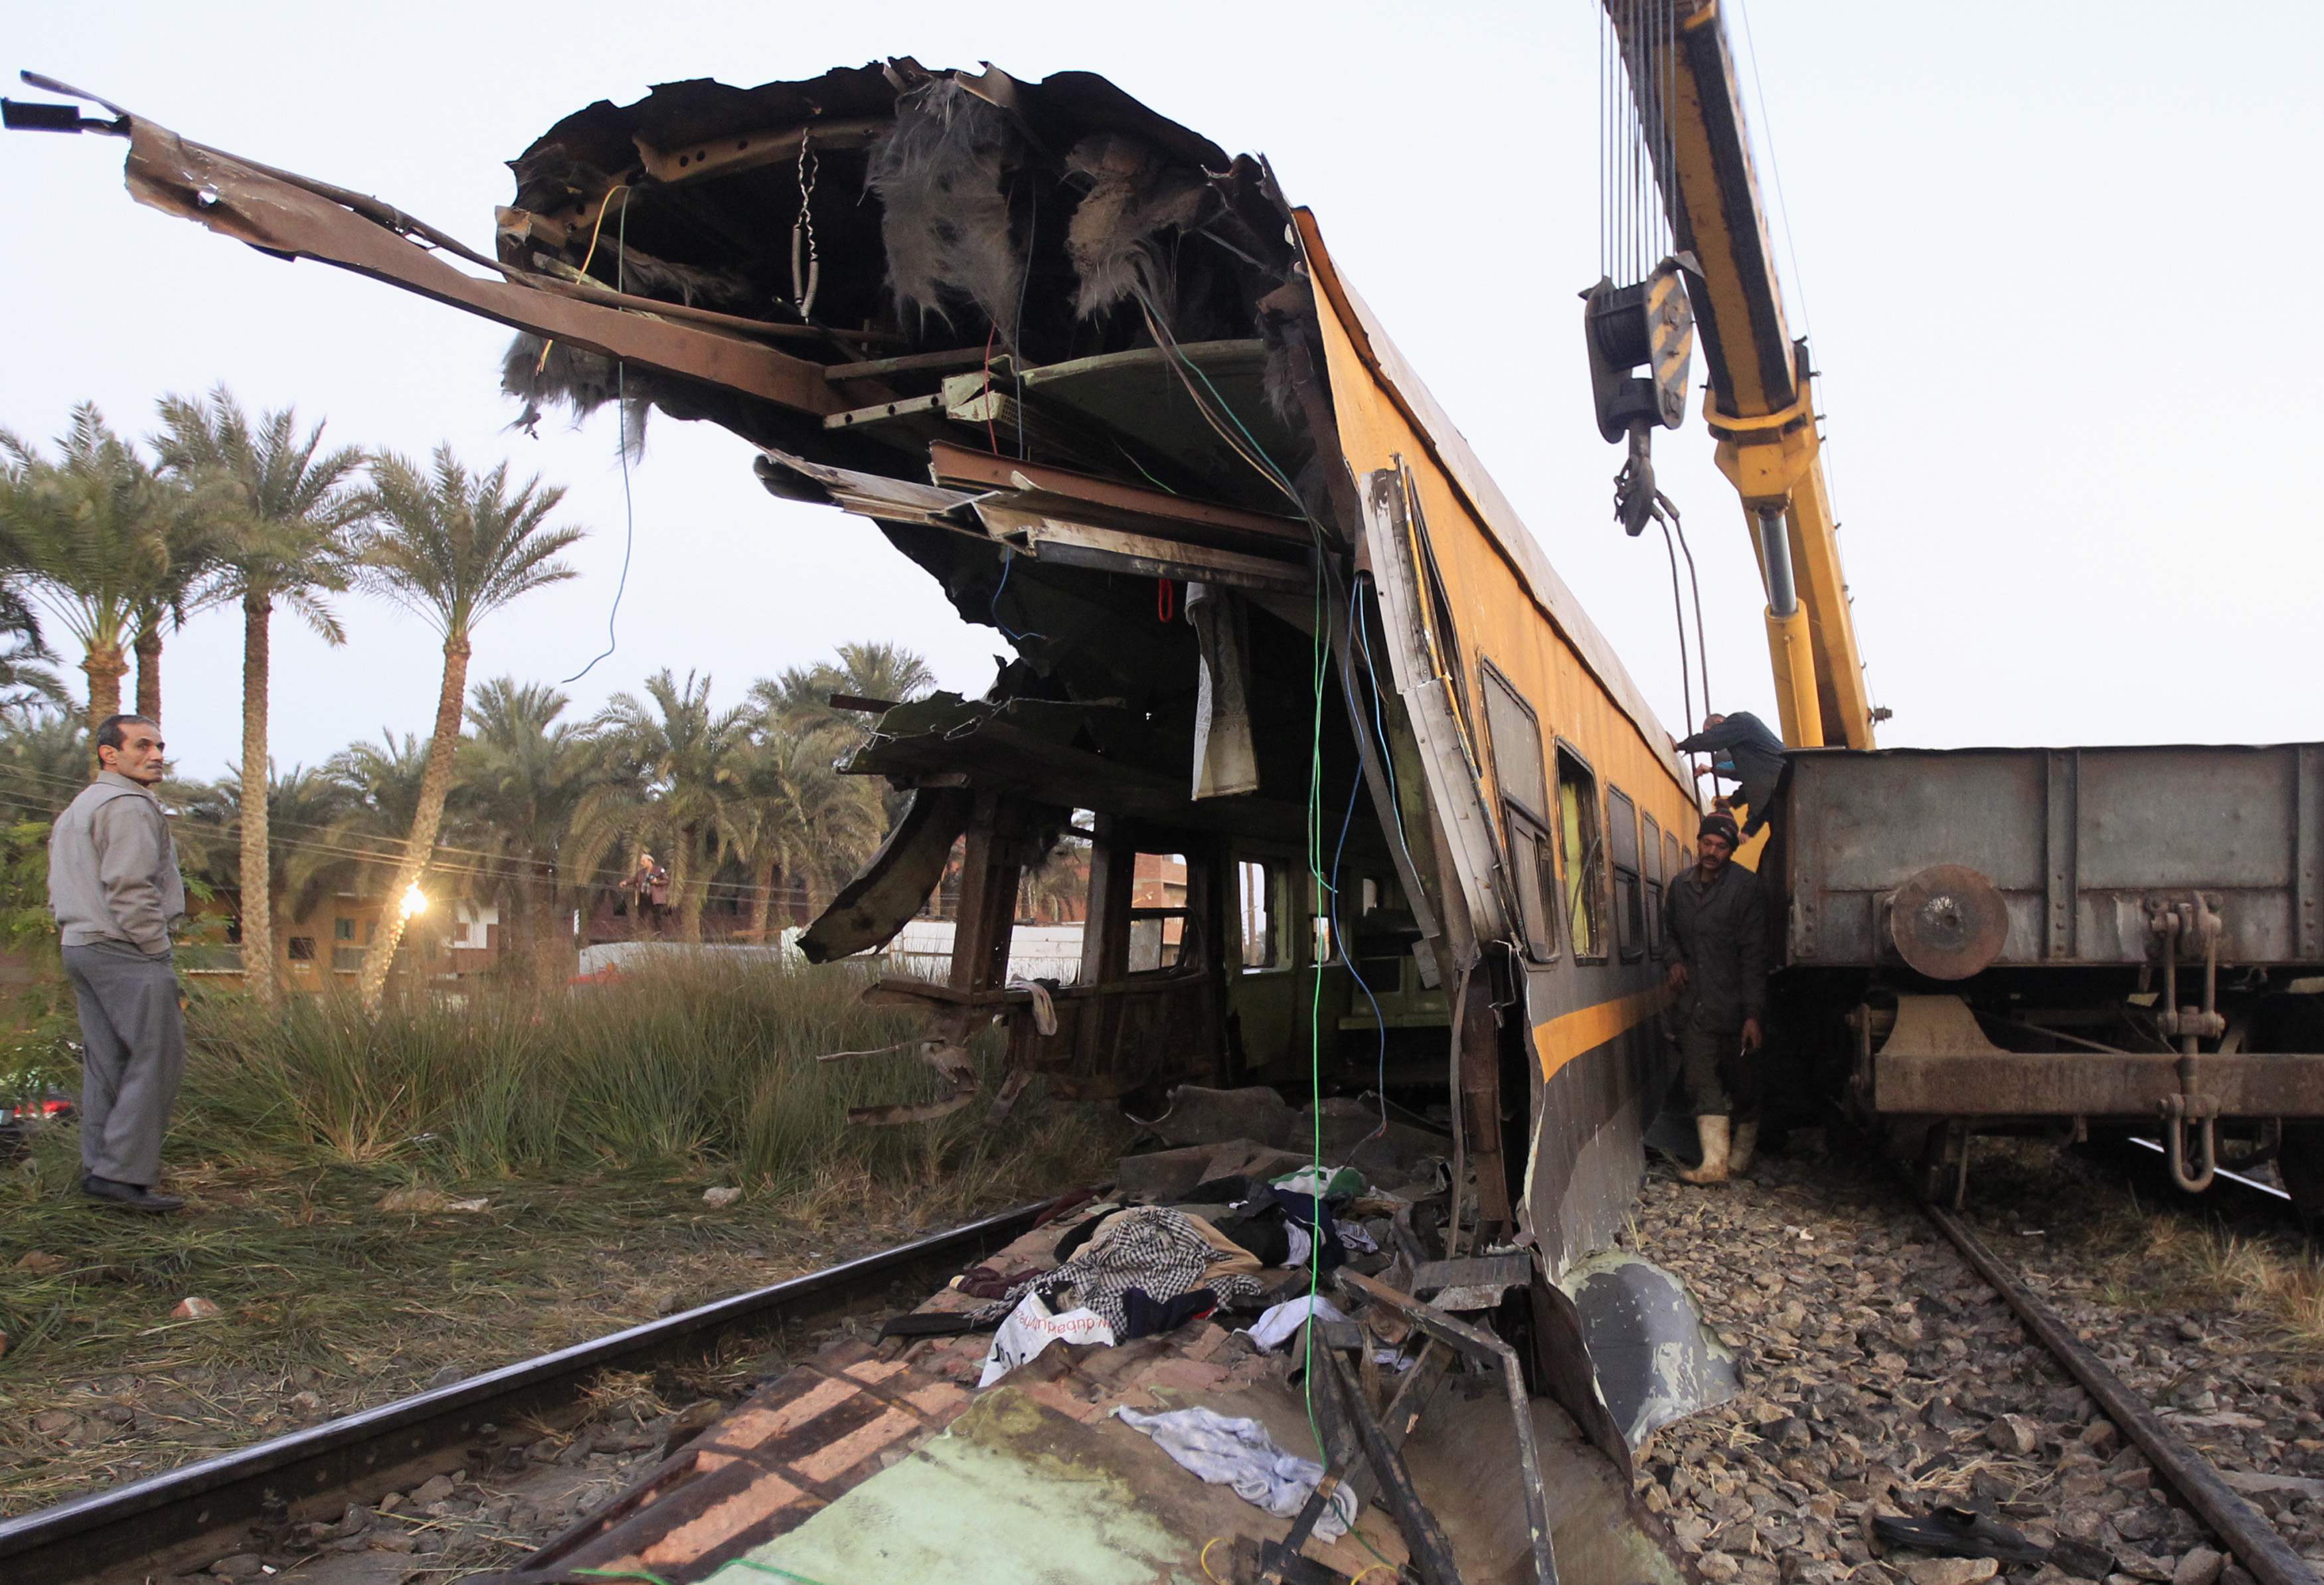 Egypt: Railway workers go on open strike